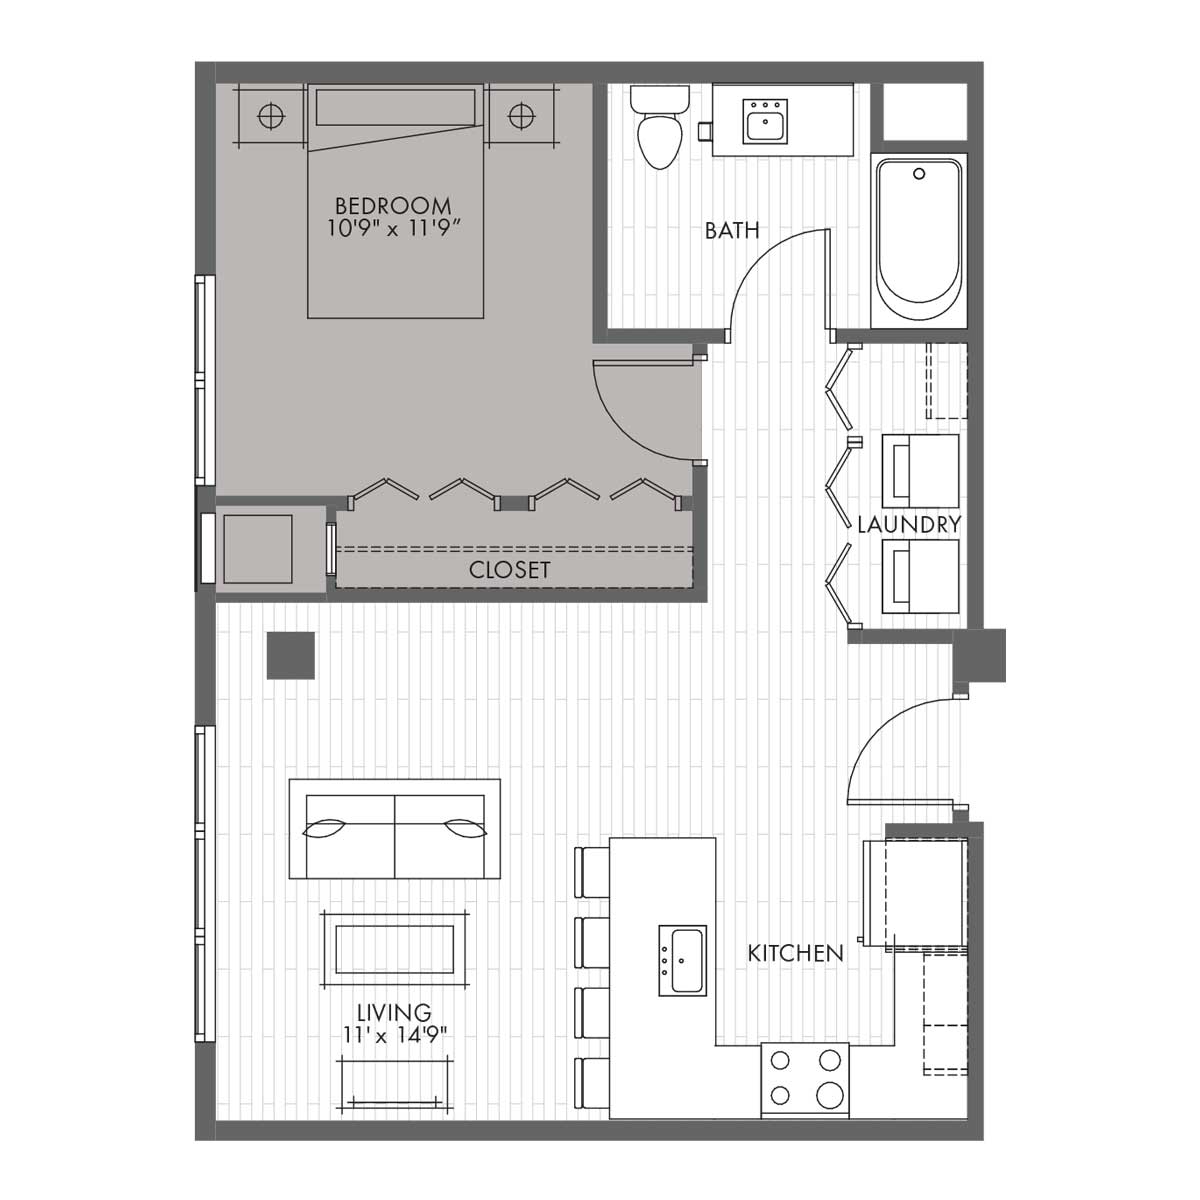 One Bedroom Floor Plan With Dimensions | www.resnooze.com